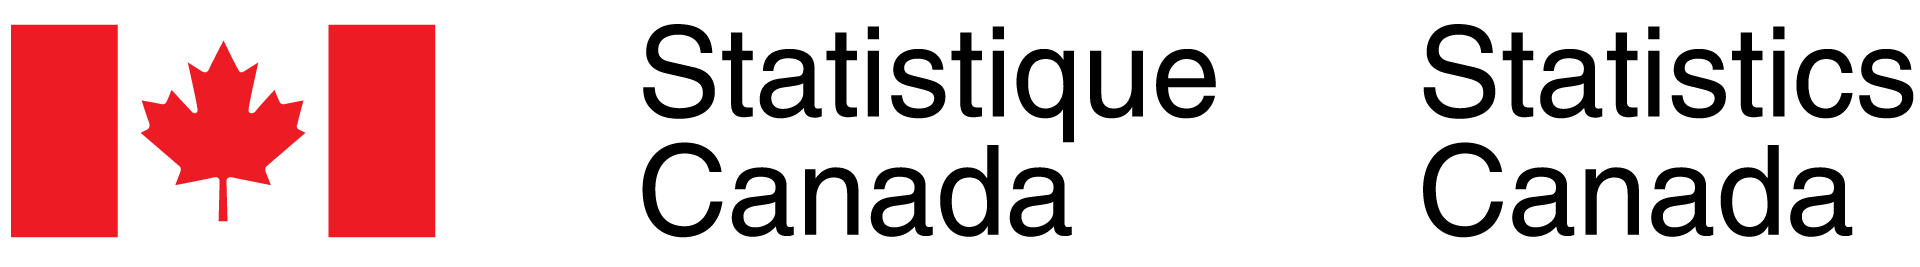 Logo for Statistics Canada/Marque pour Statistique Canada.